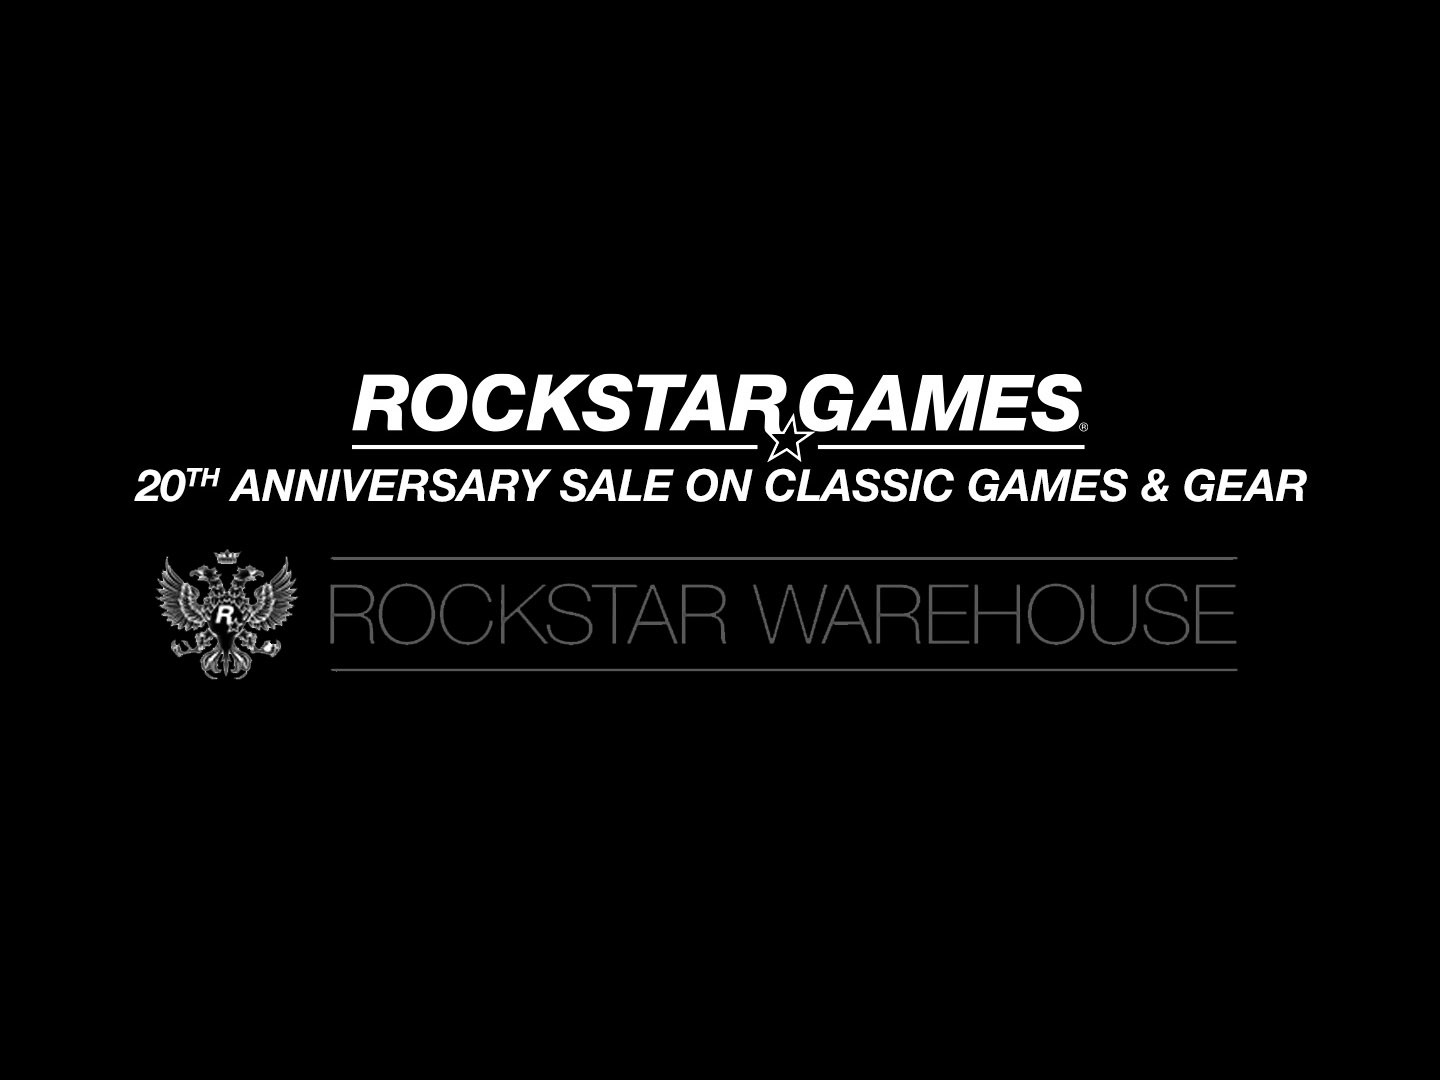 Rockstar Games 20th Anniversary Rockstar Warehouse